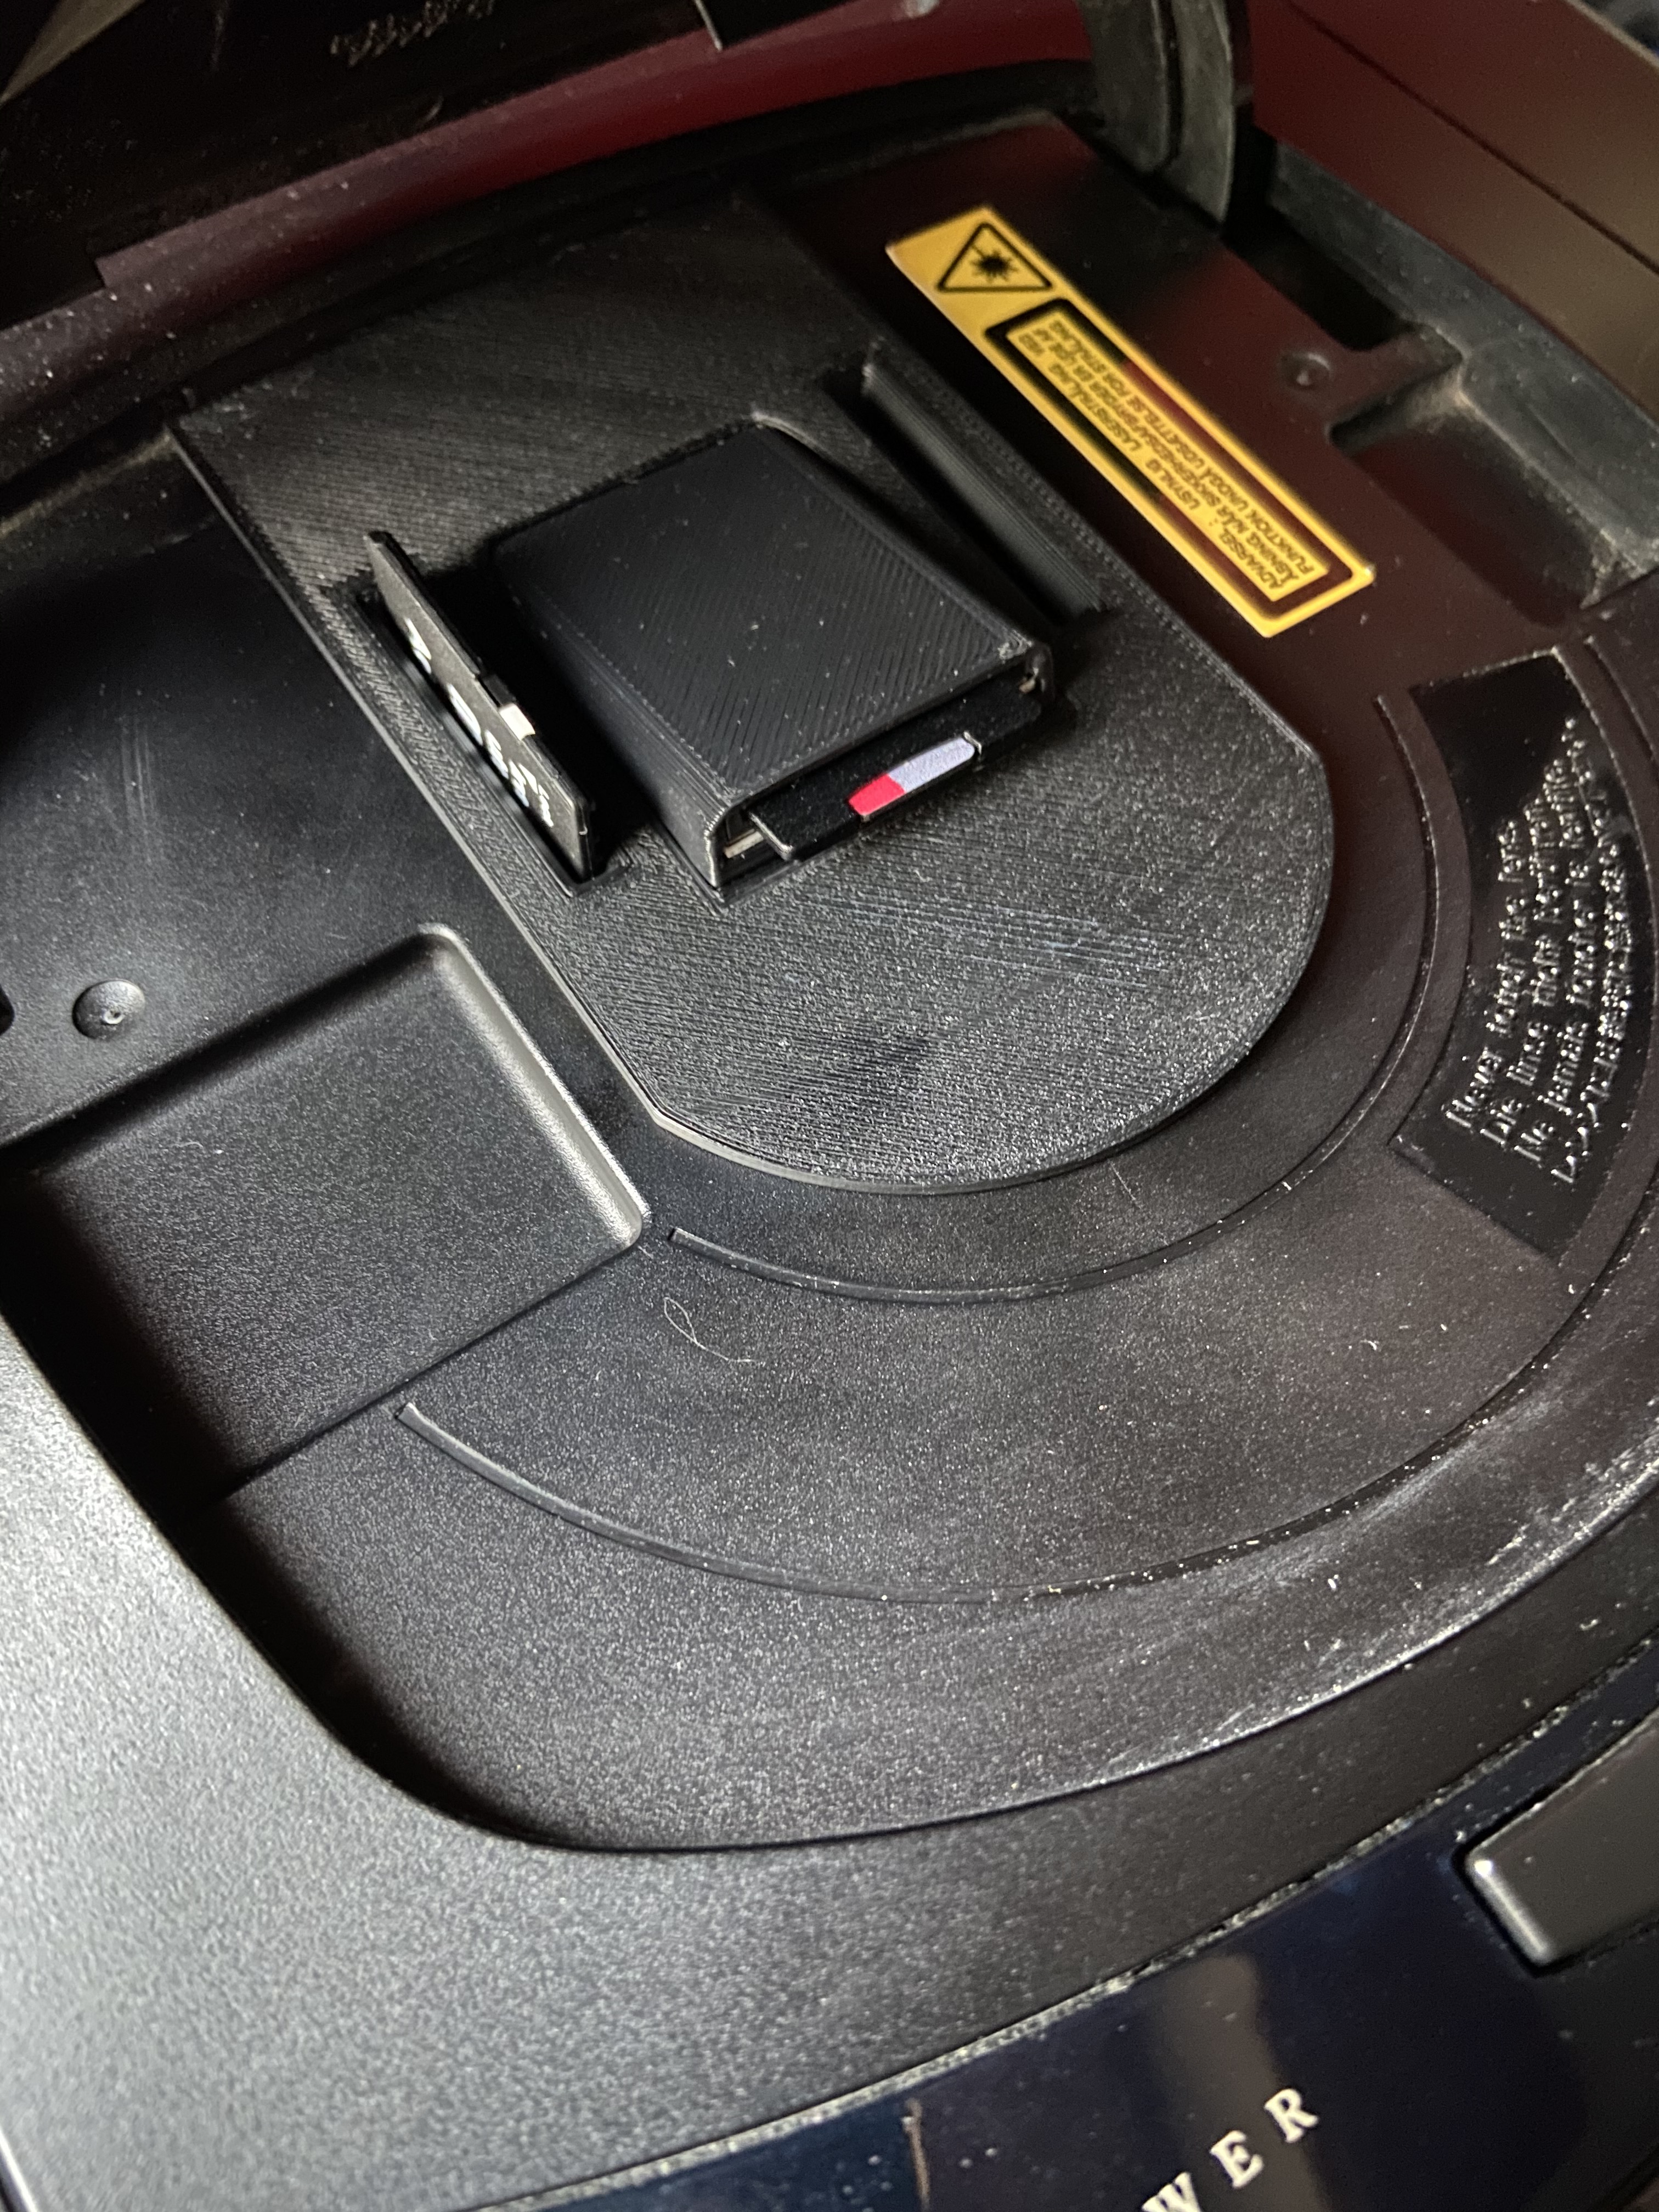 Sega Saturn SD card holder installed